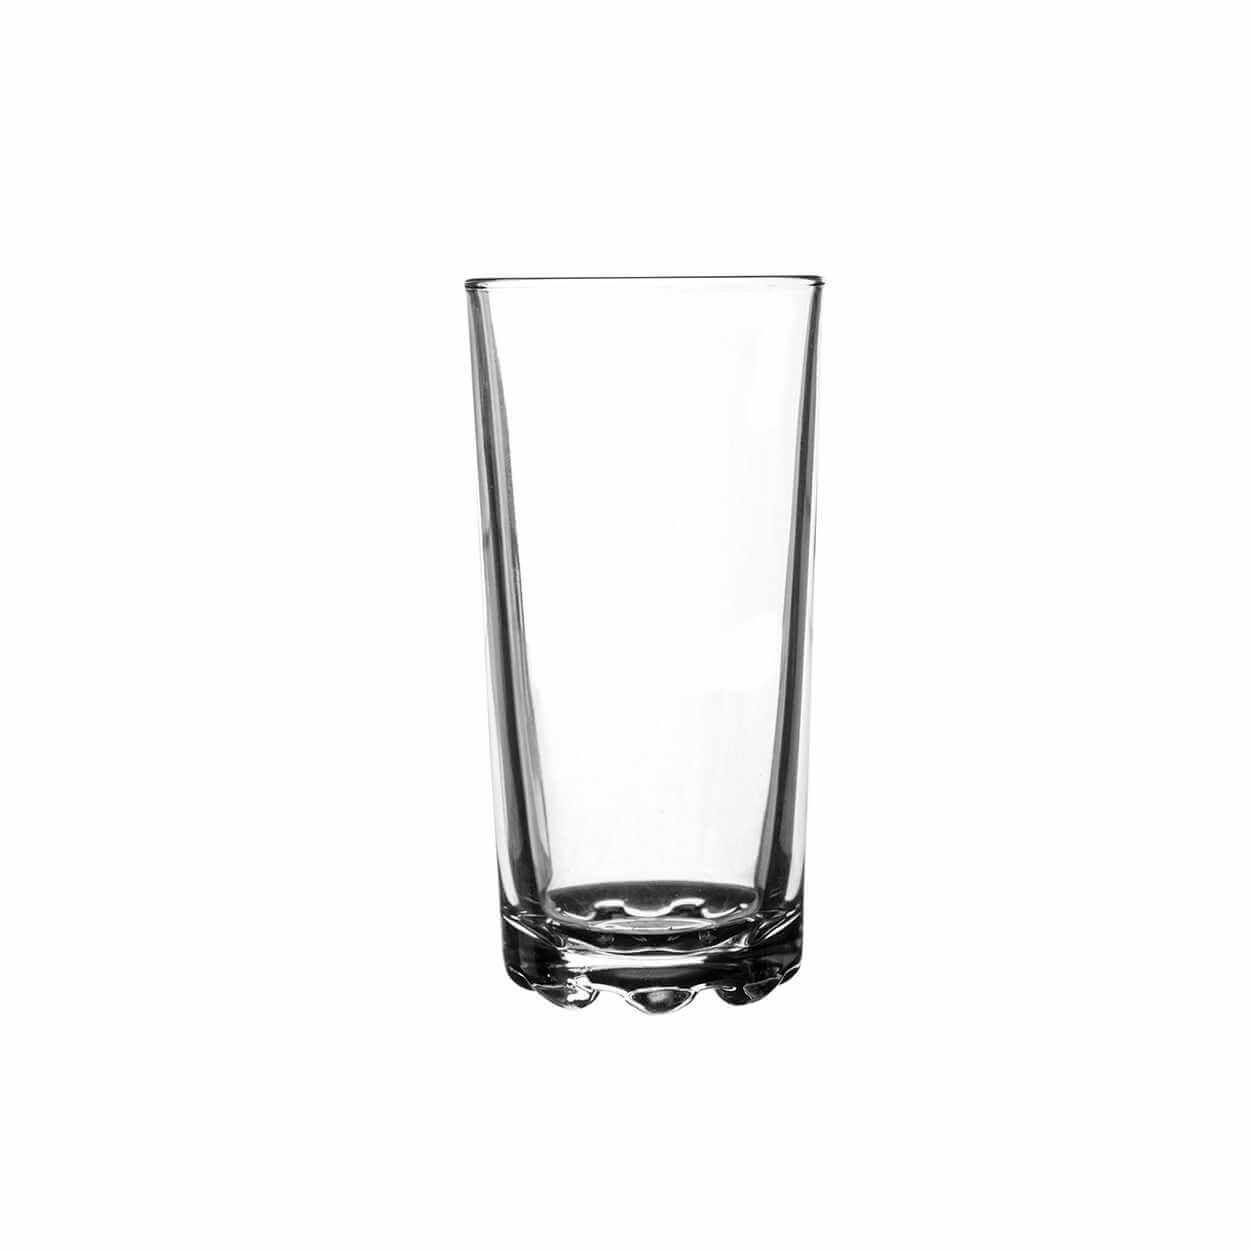 Ravenhead Essentials Hobnobs Hiball Glasses | Set of 6 - Choice Stores